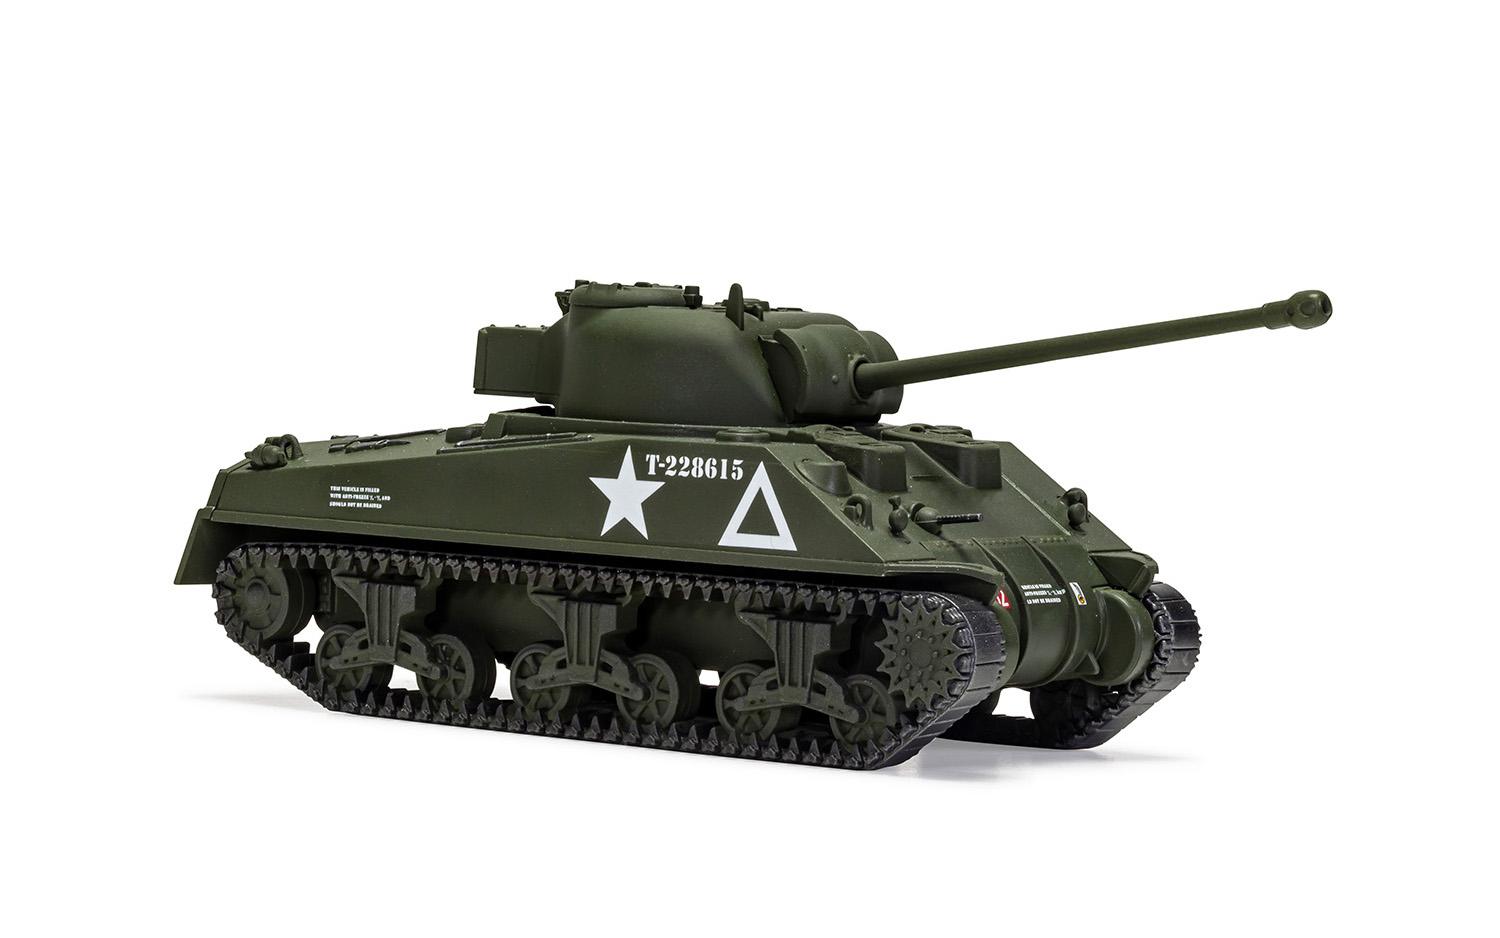 Side view of the dark grey/green Sherman model tank.